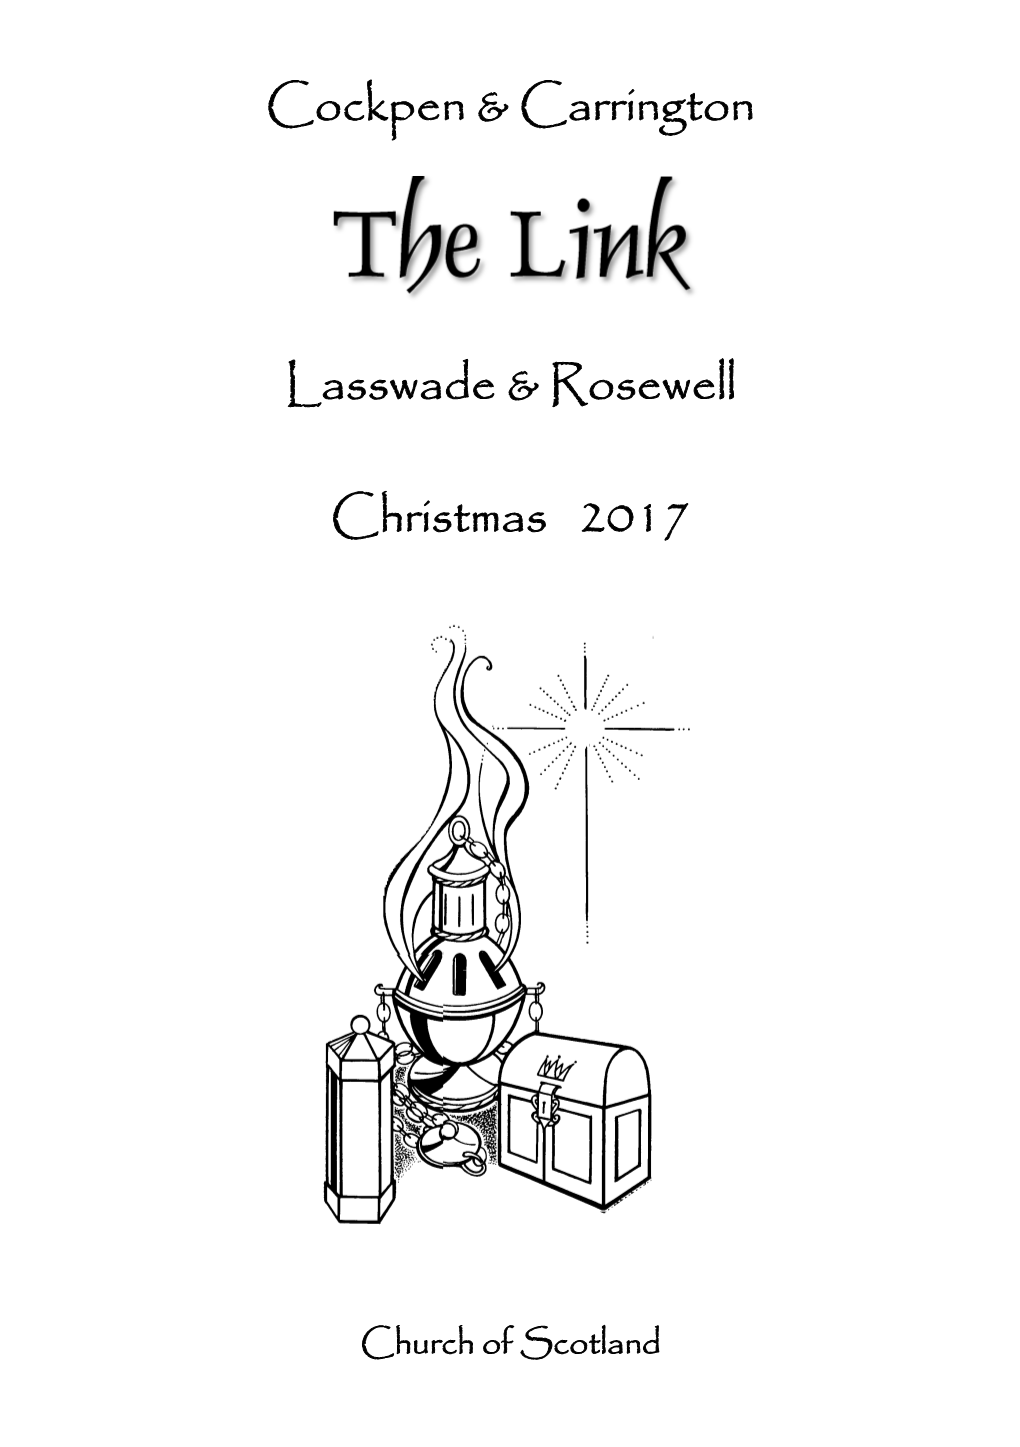 Cockpen & Carrington Lasswade & Rosewell Christmas 2017